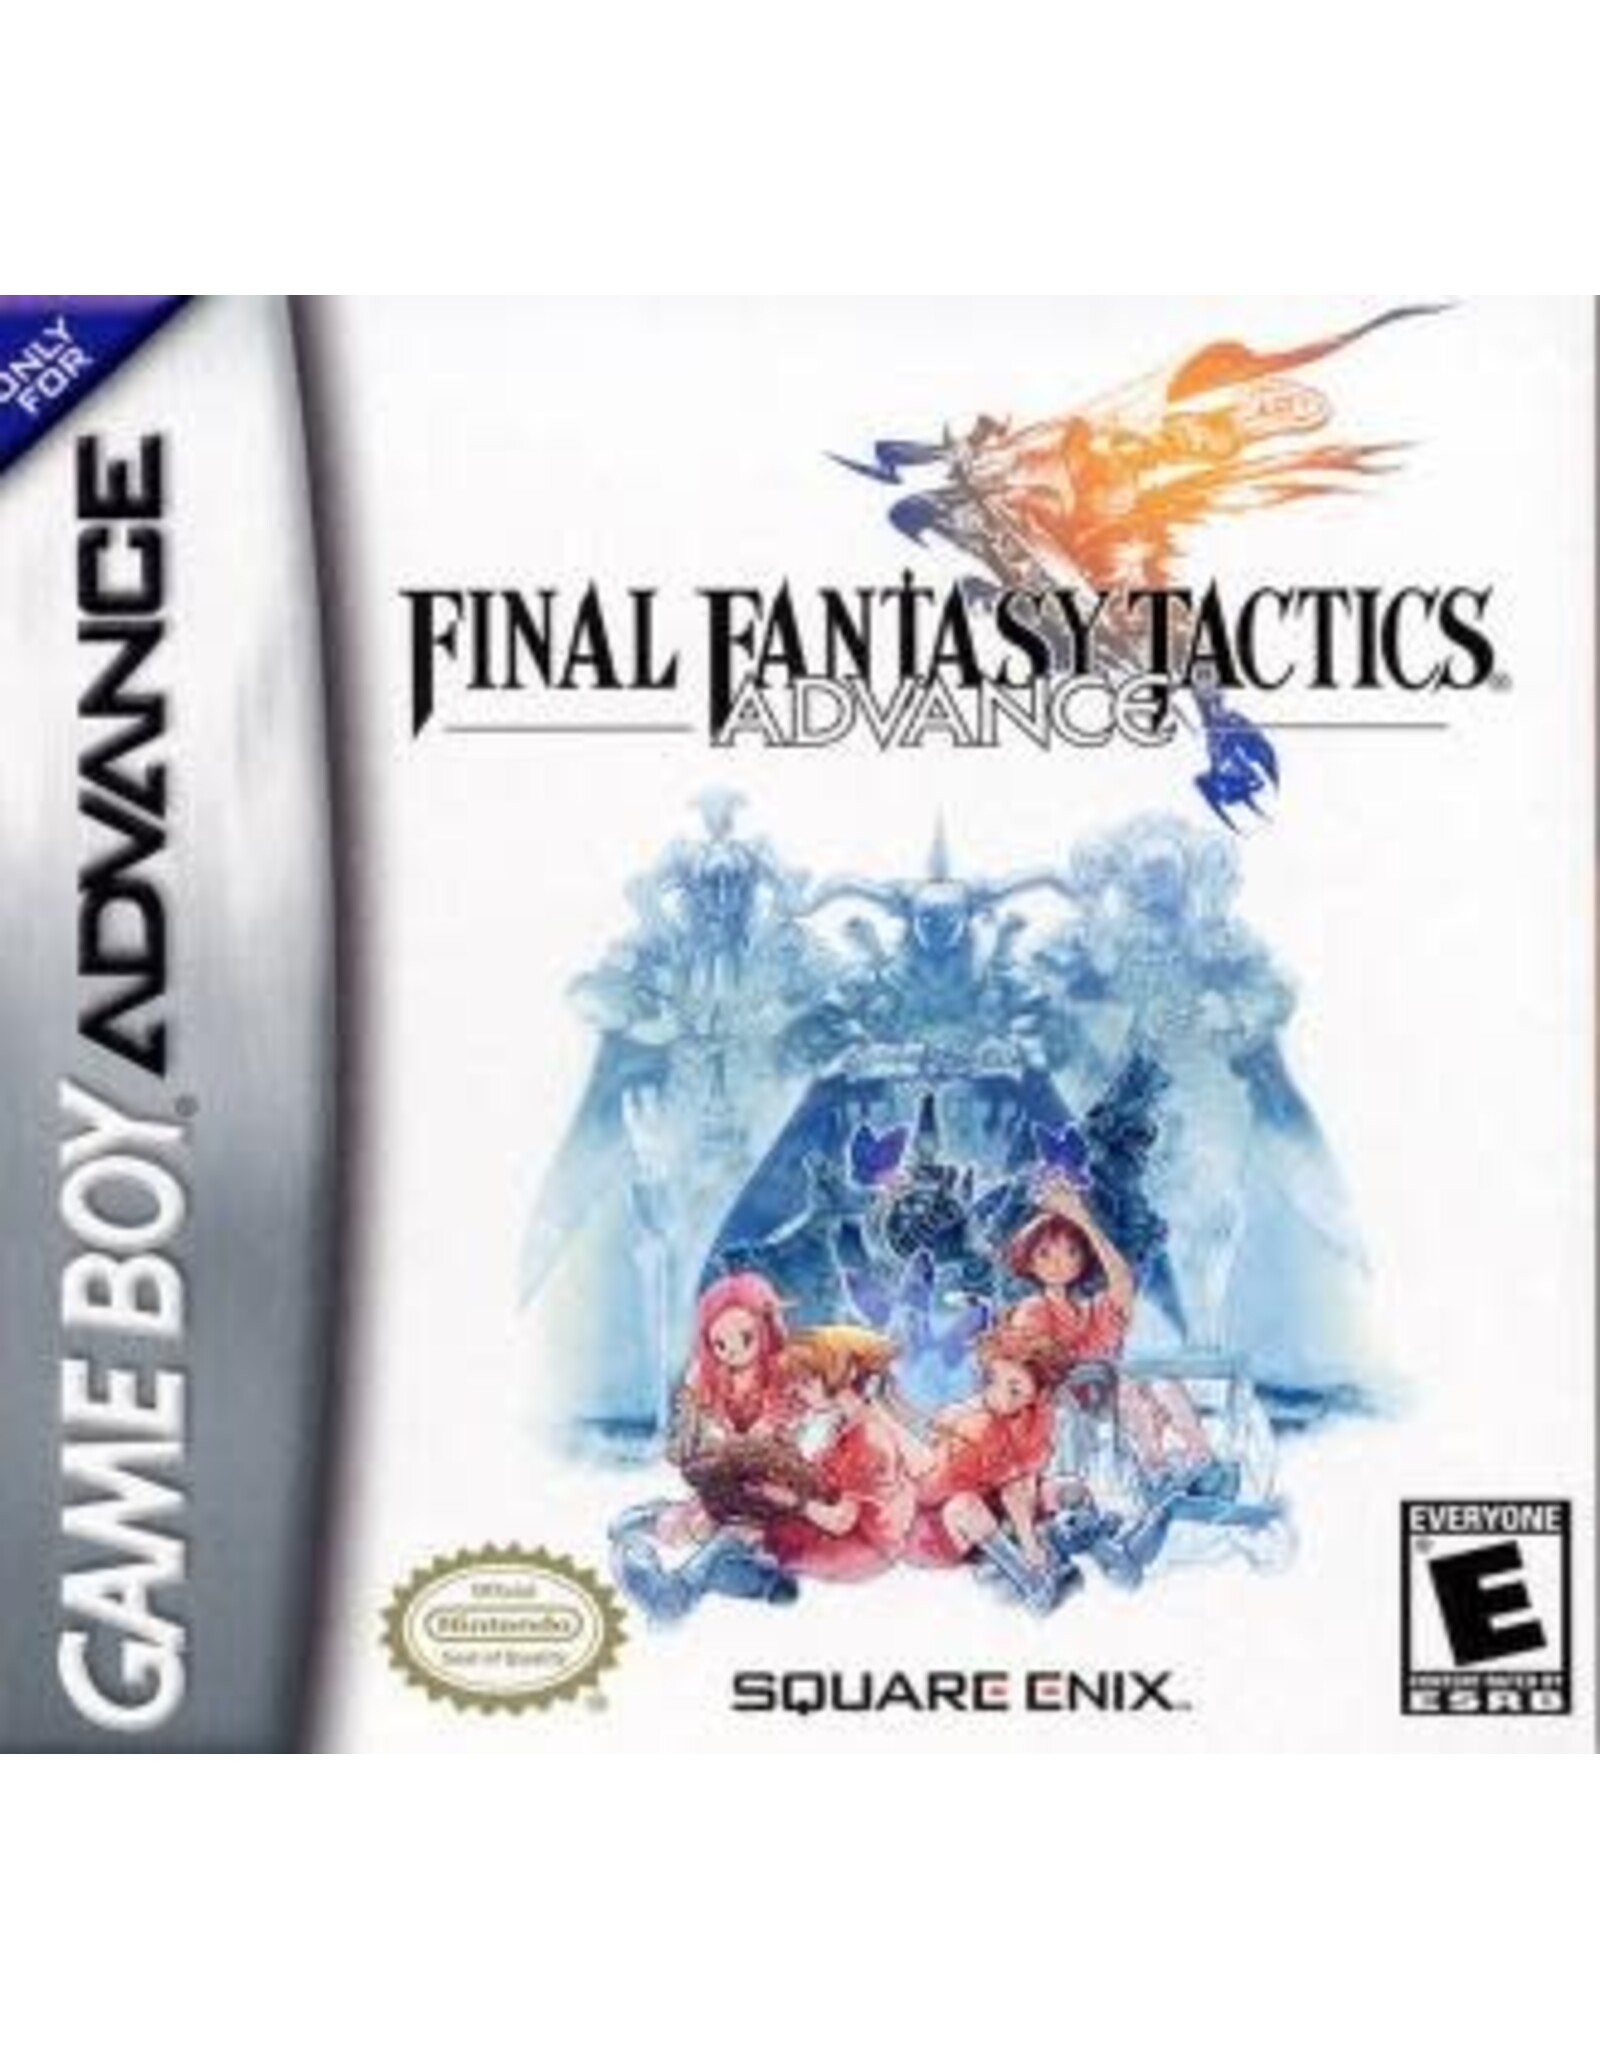 Game Boy Advance Final Fantasy Tactics Advance (Cart Only)